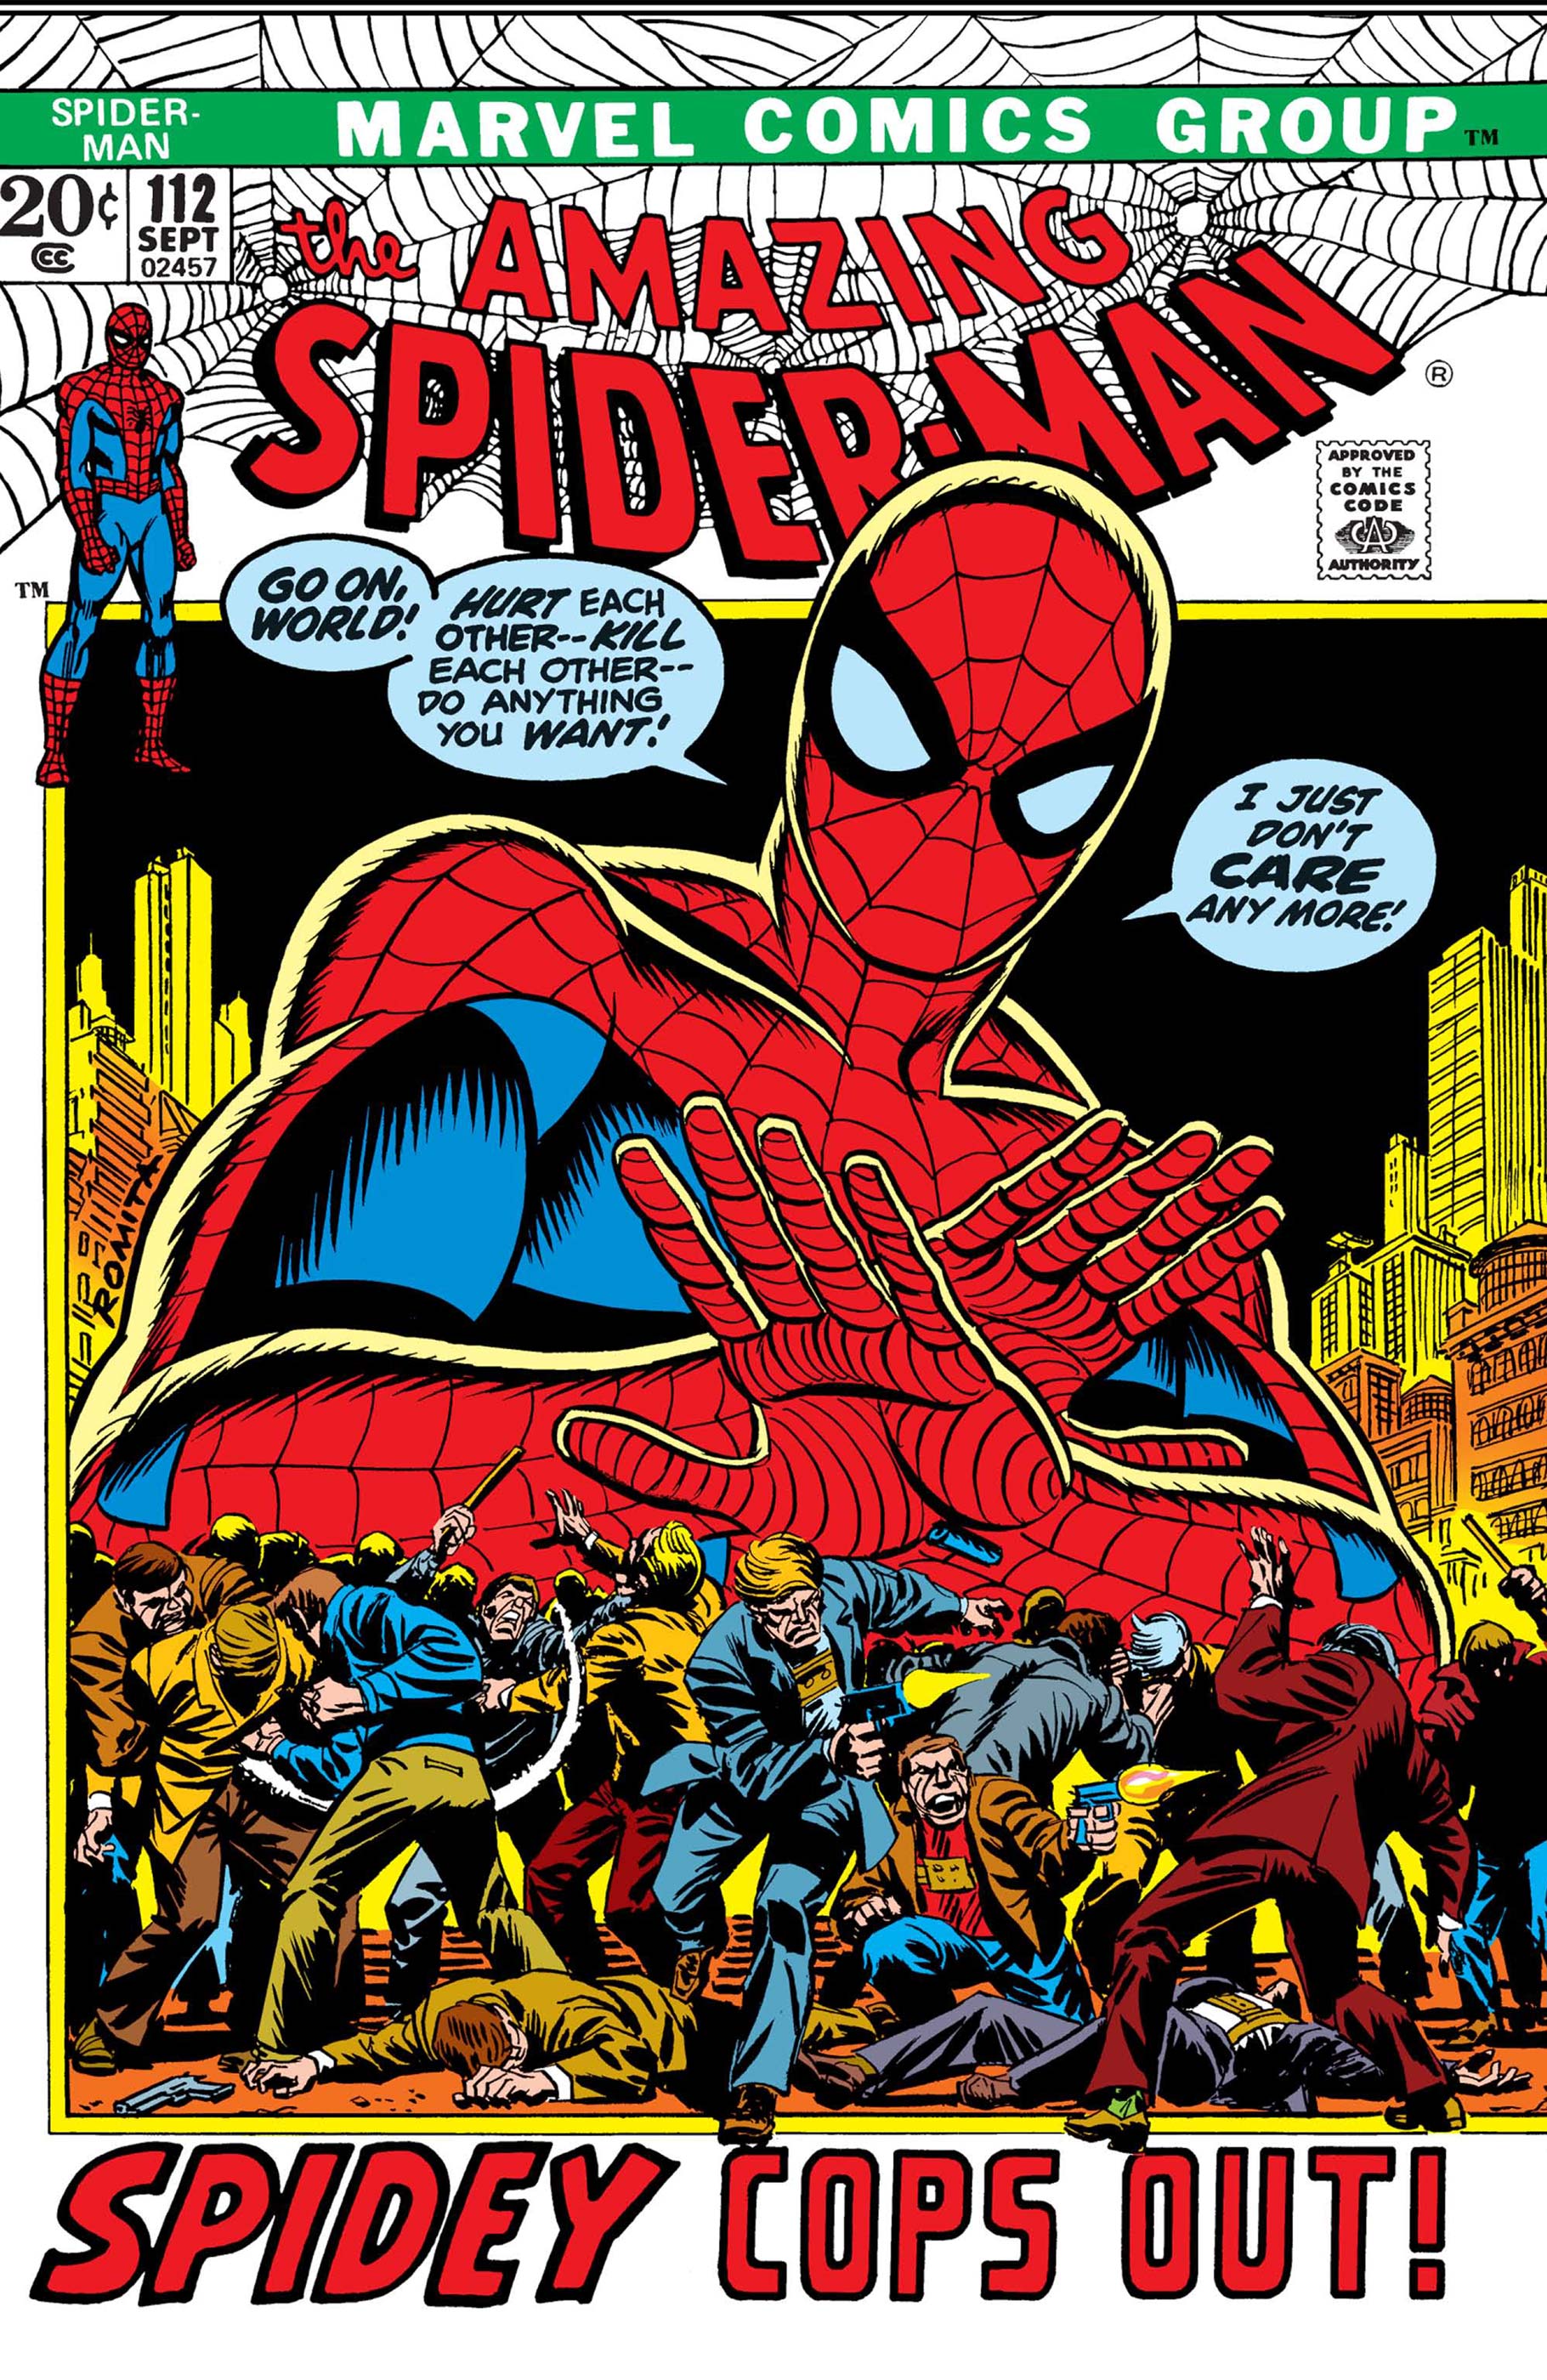 Amazing Spiderman #112 FRIDGE MAGNET comic book 